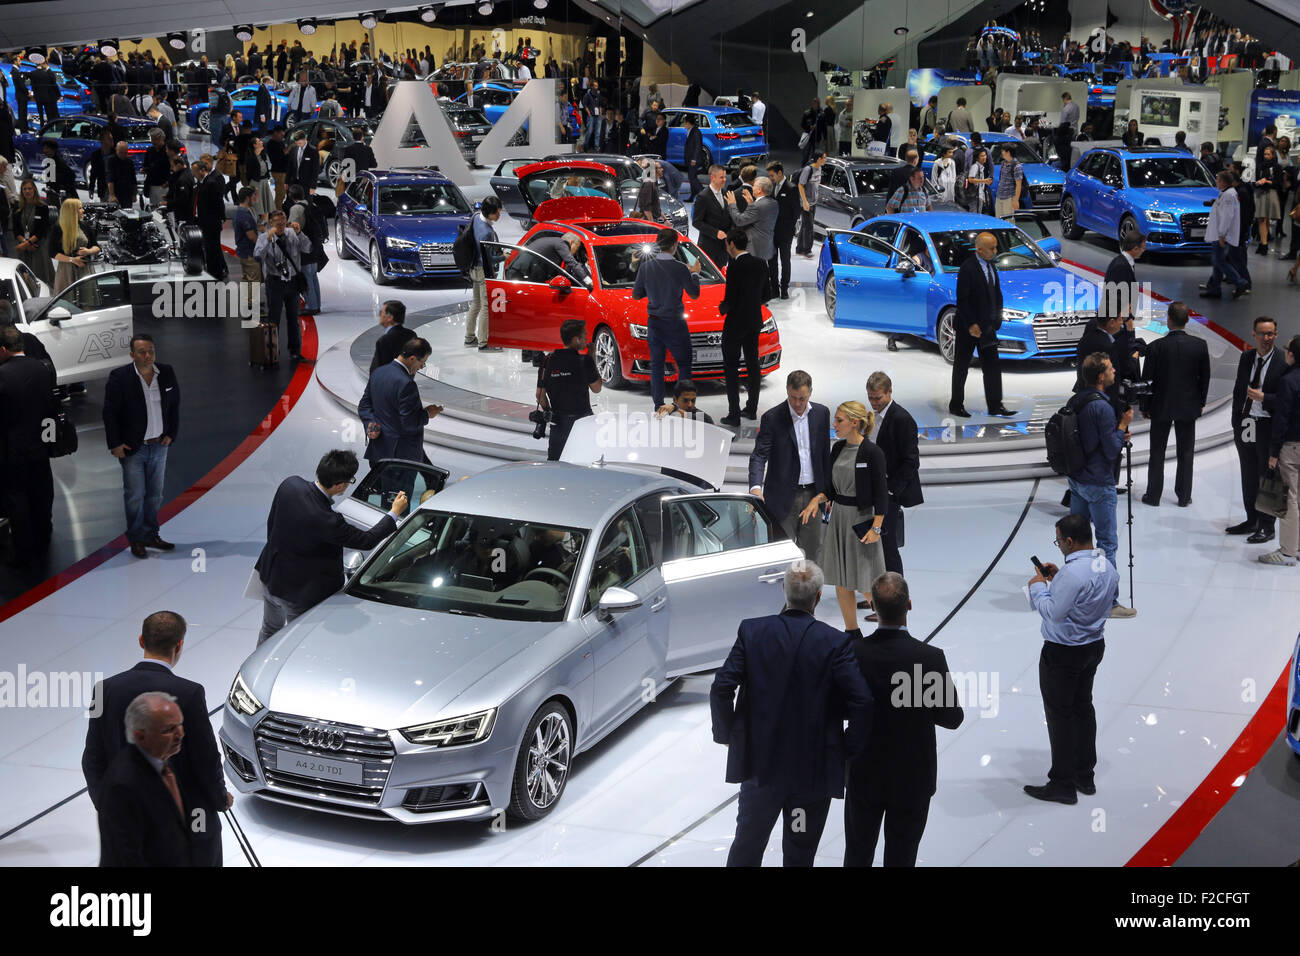 Frankfurt/M, 16.09.2015 - stand de Audi en el 66º Salón Internacional del Automóvil IAA 2015 (Internationale Automobil Ausstellung IAA) en Frankfurt/Main, Alemania Foto de stock